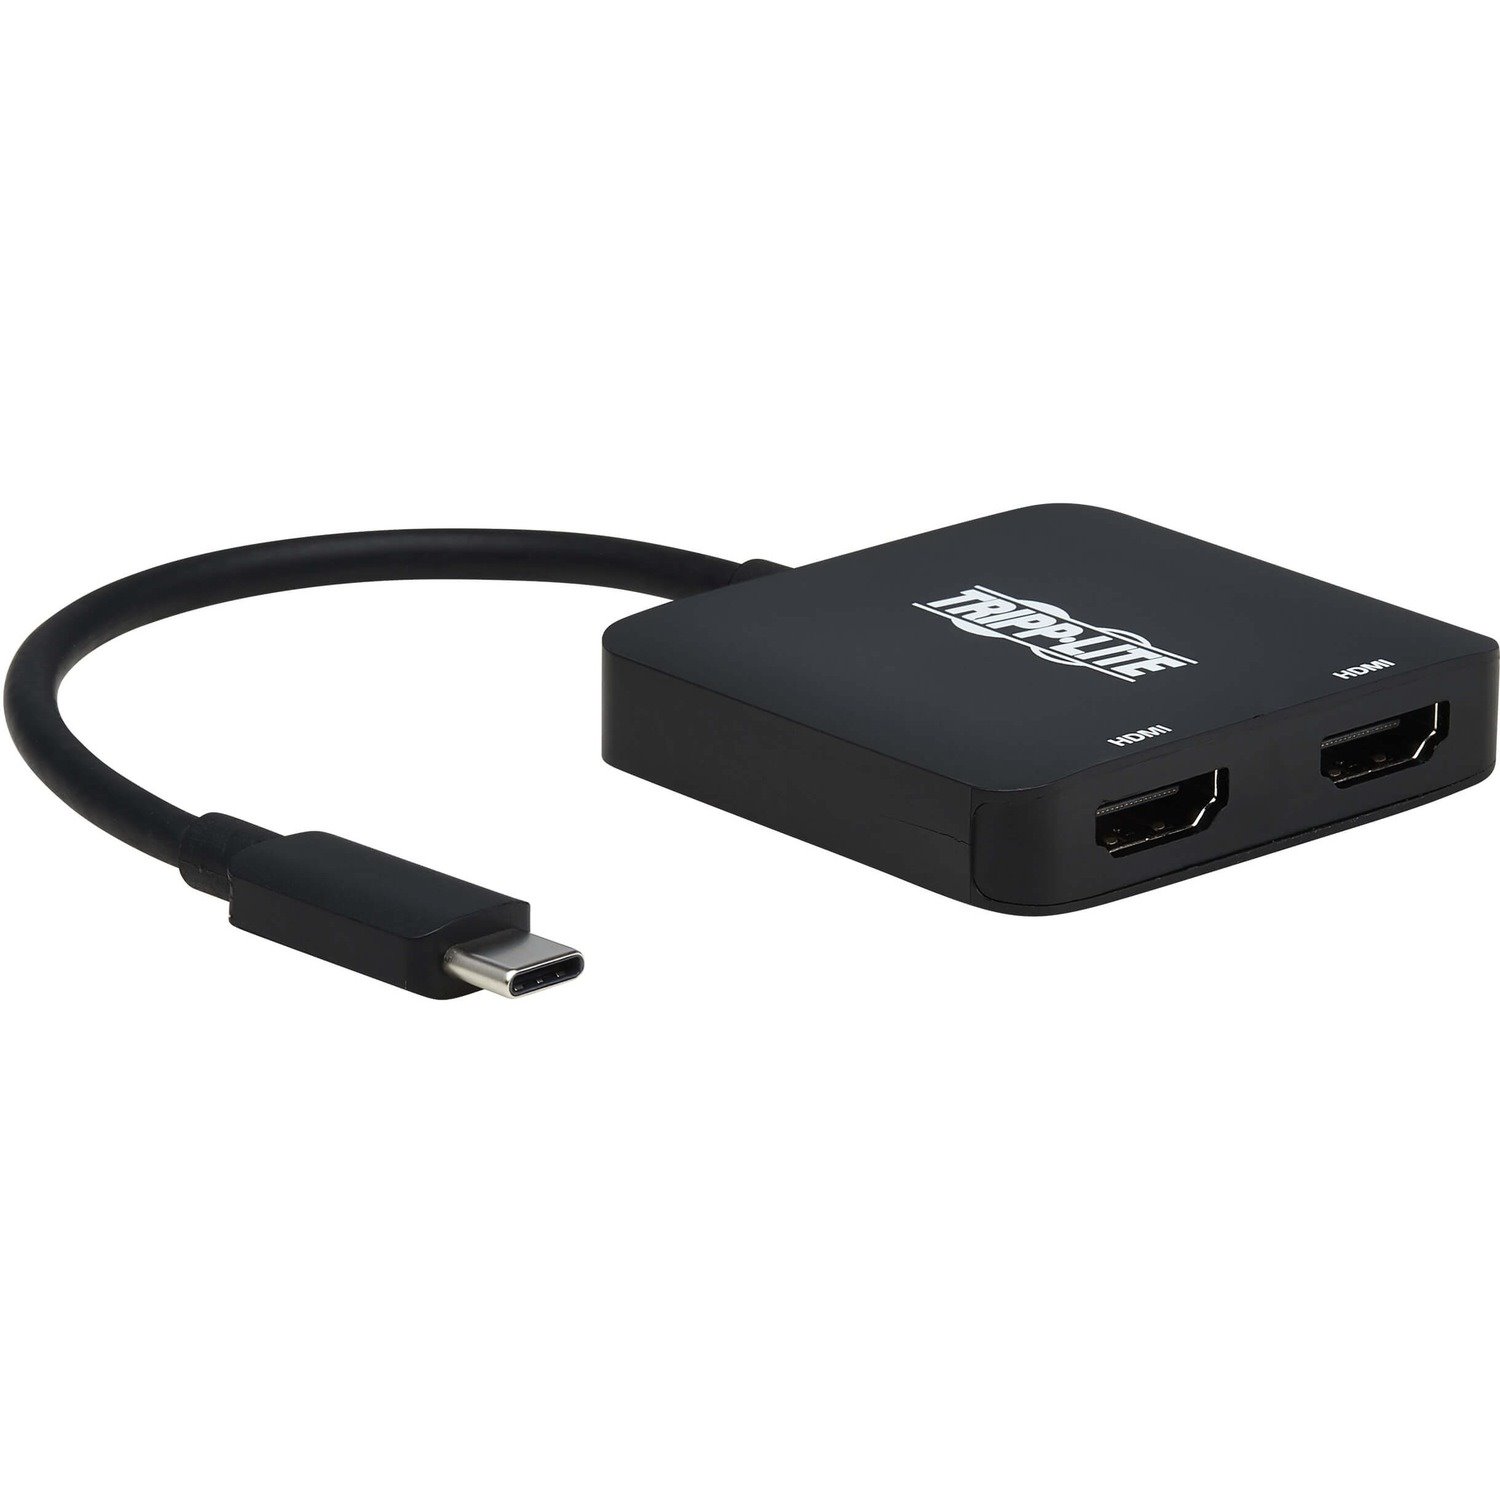 Eaton Tripp Lite Series USB-C Adapter, Dual Display - 4K 60 Hz HDMI, HDR, 4:4:4, HDCP 2.2, DP 1.4 Alt Mode, Black